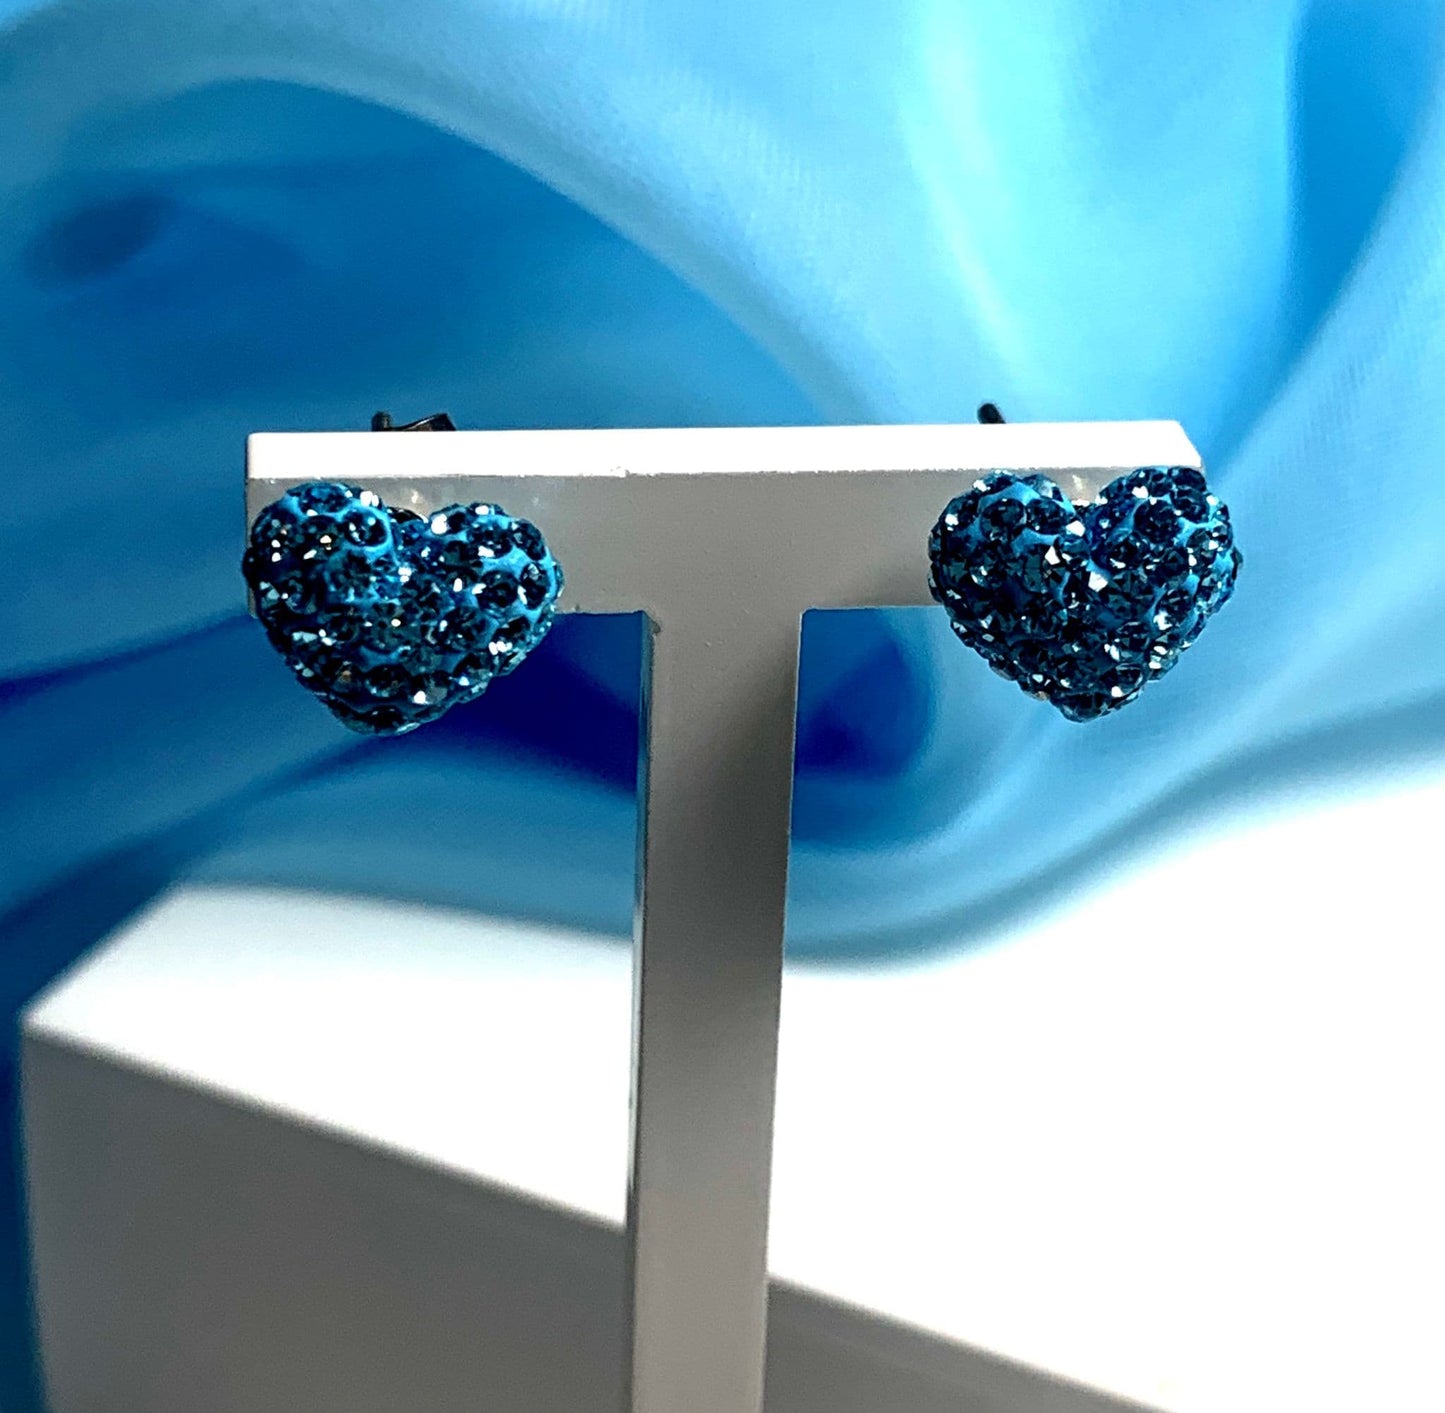 Tresor Paris light blue heart shaped 10 mm stud earrings titanium